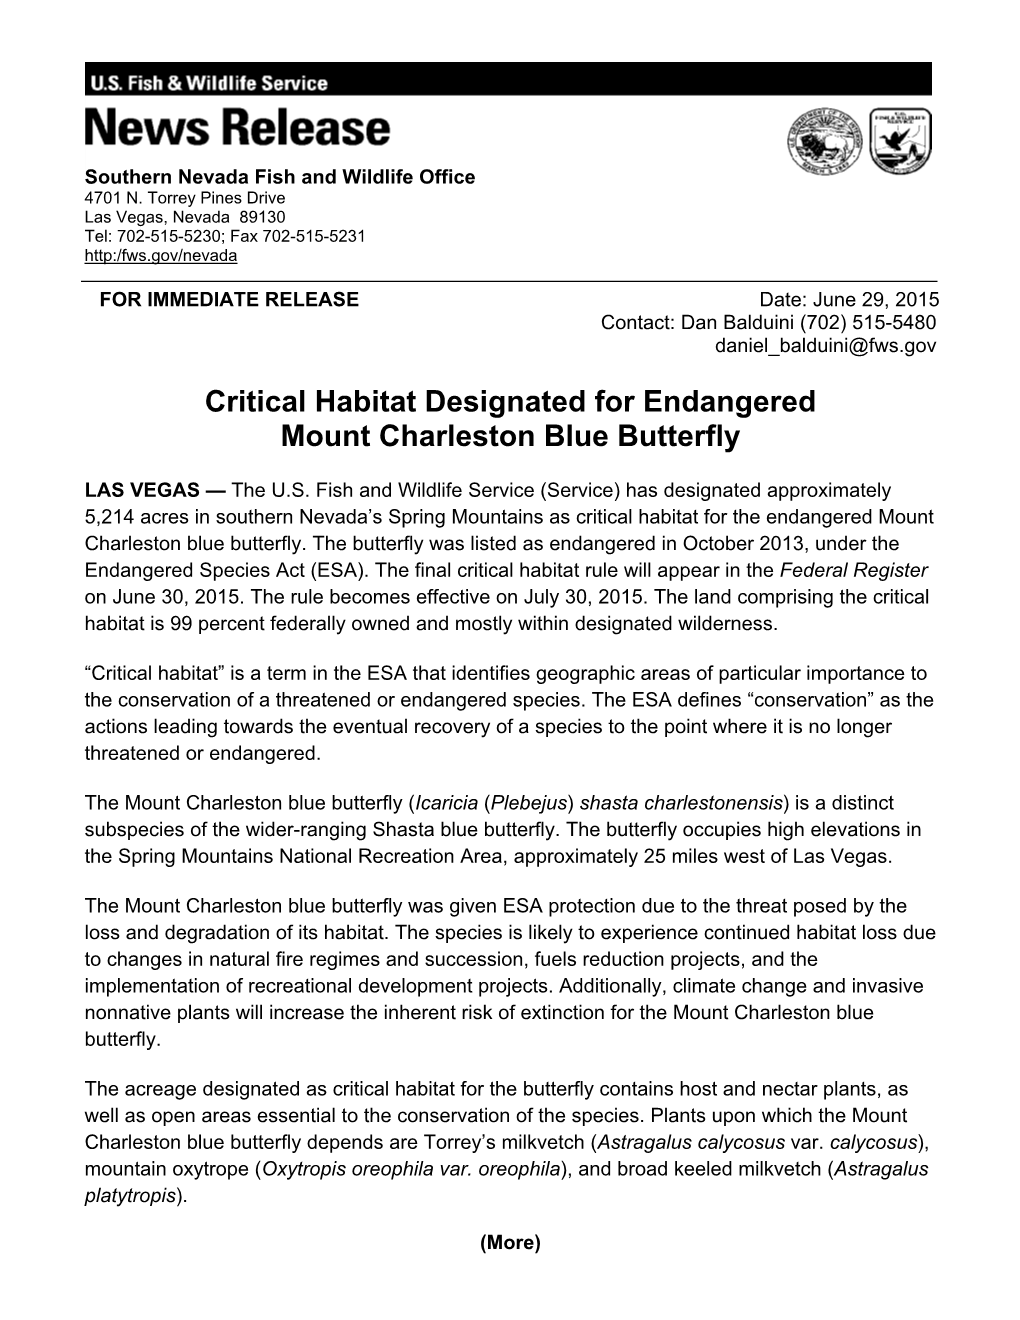 Critical Habitat Designated for Endangered Mount Charleston Blue Butterfly